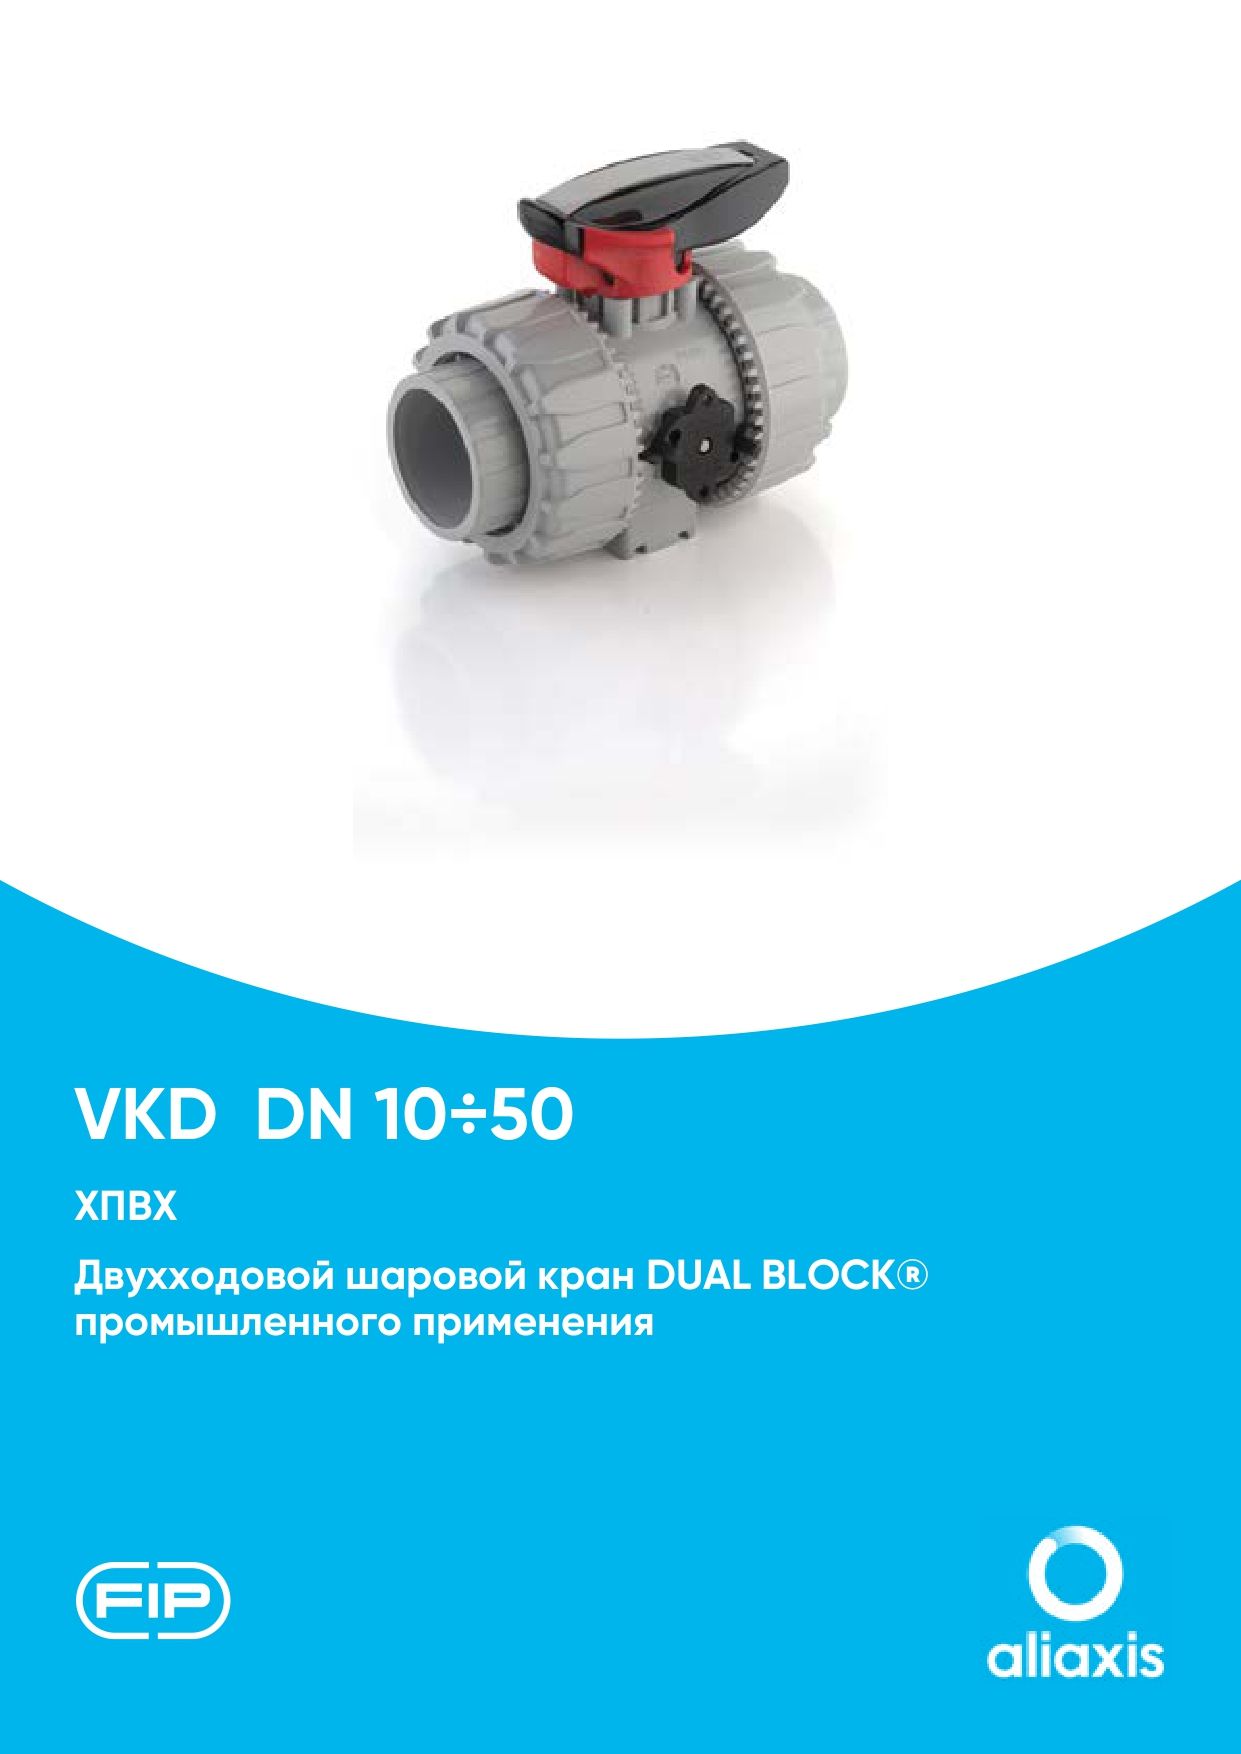 Промышленные шаровые краны VKD DN15-50 из ХПВХ